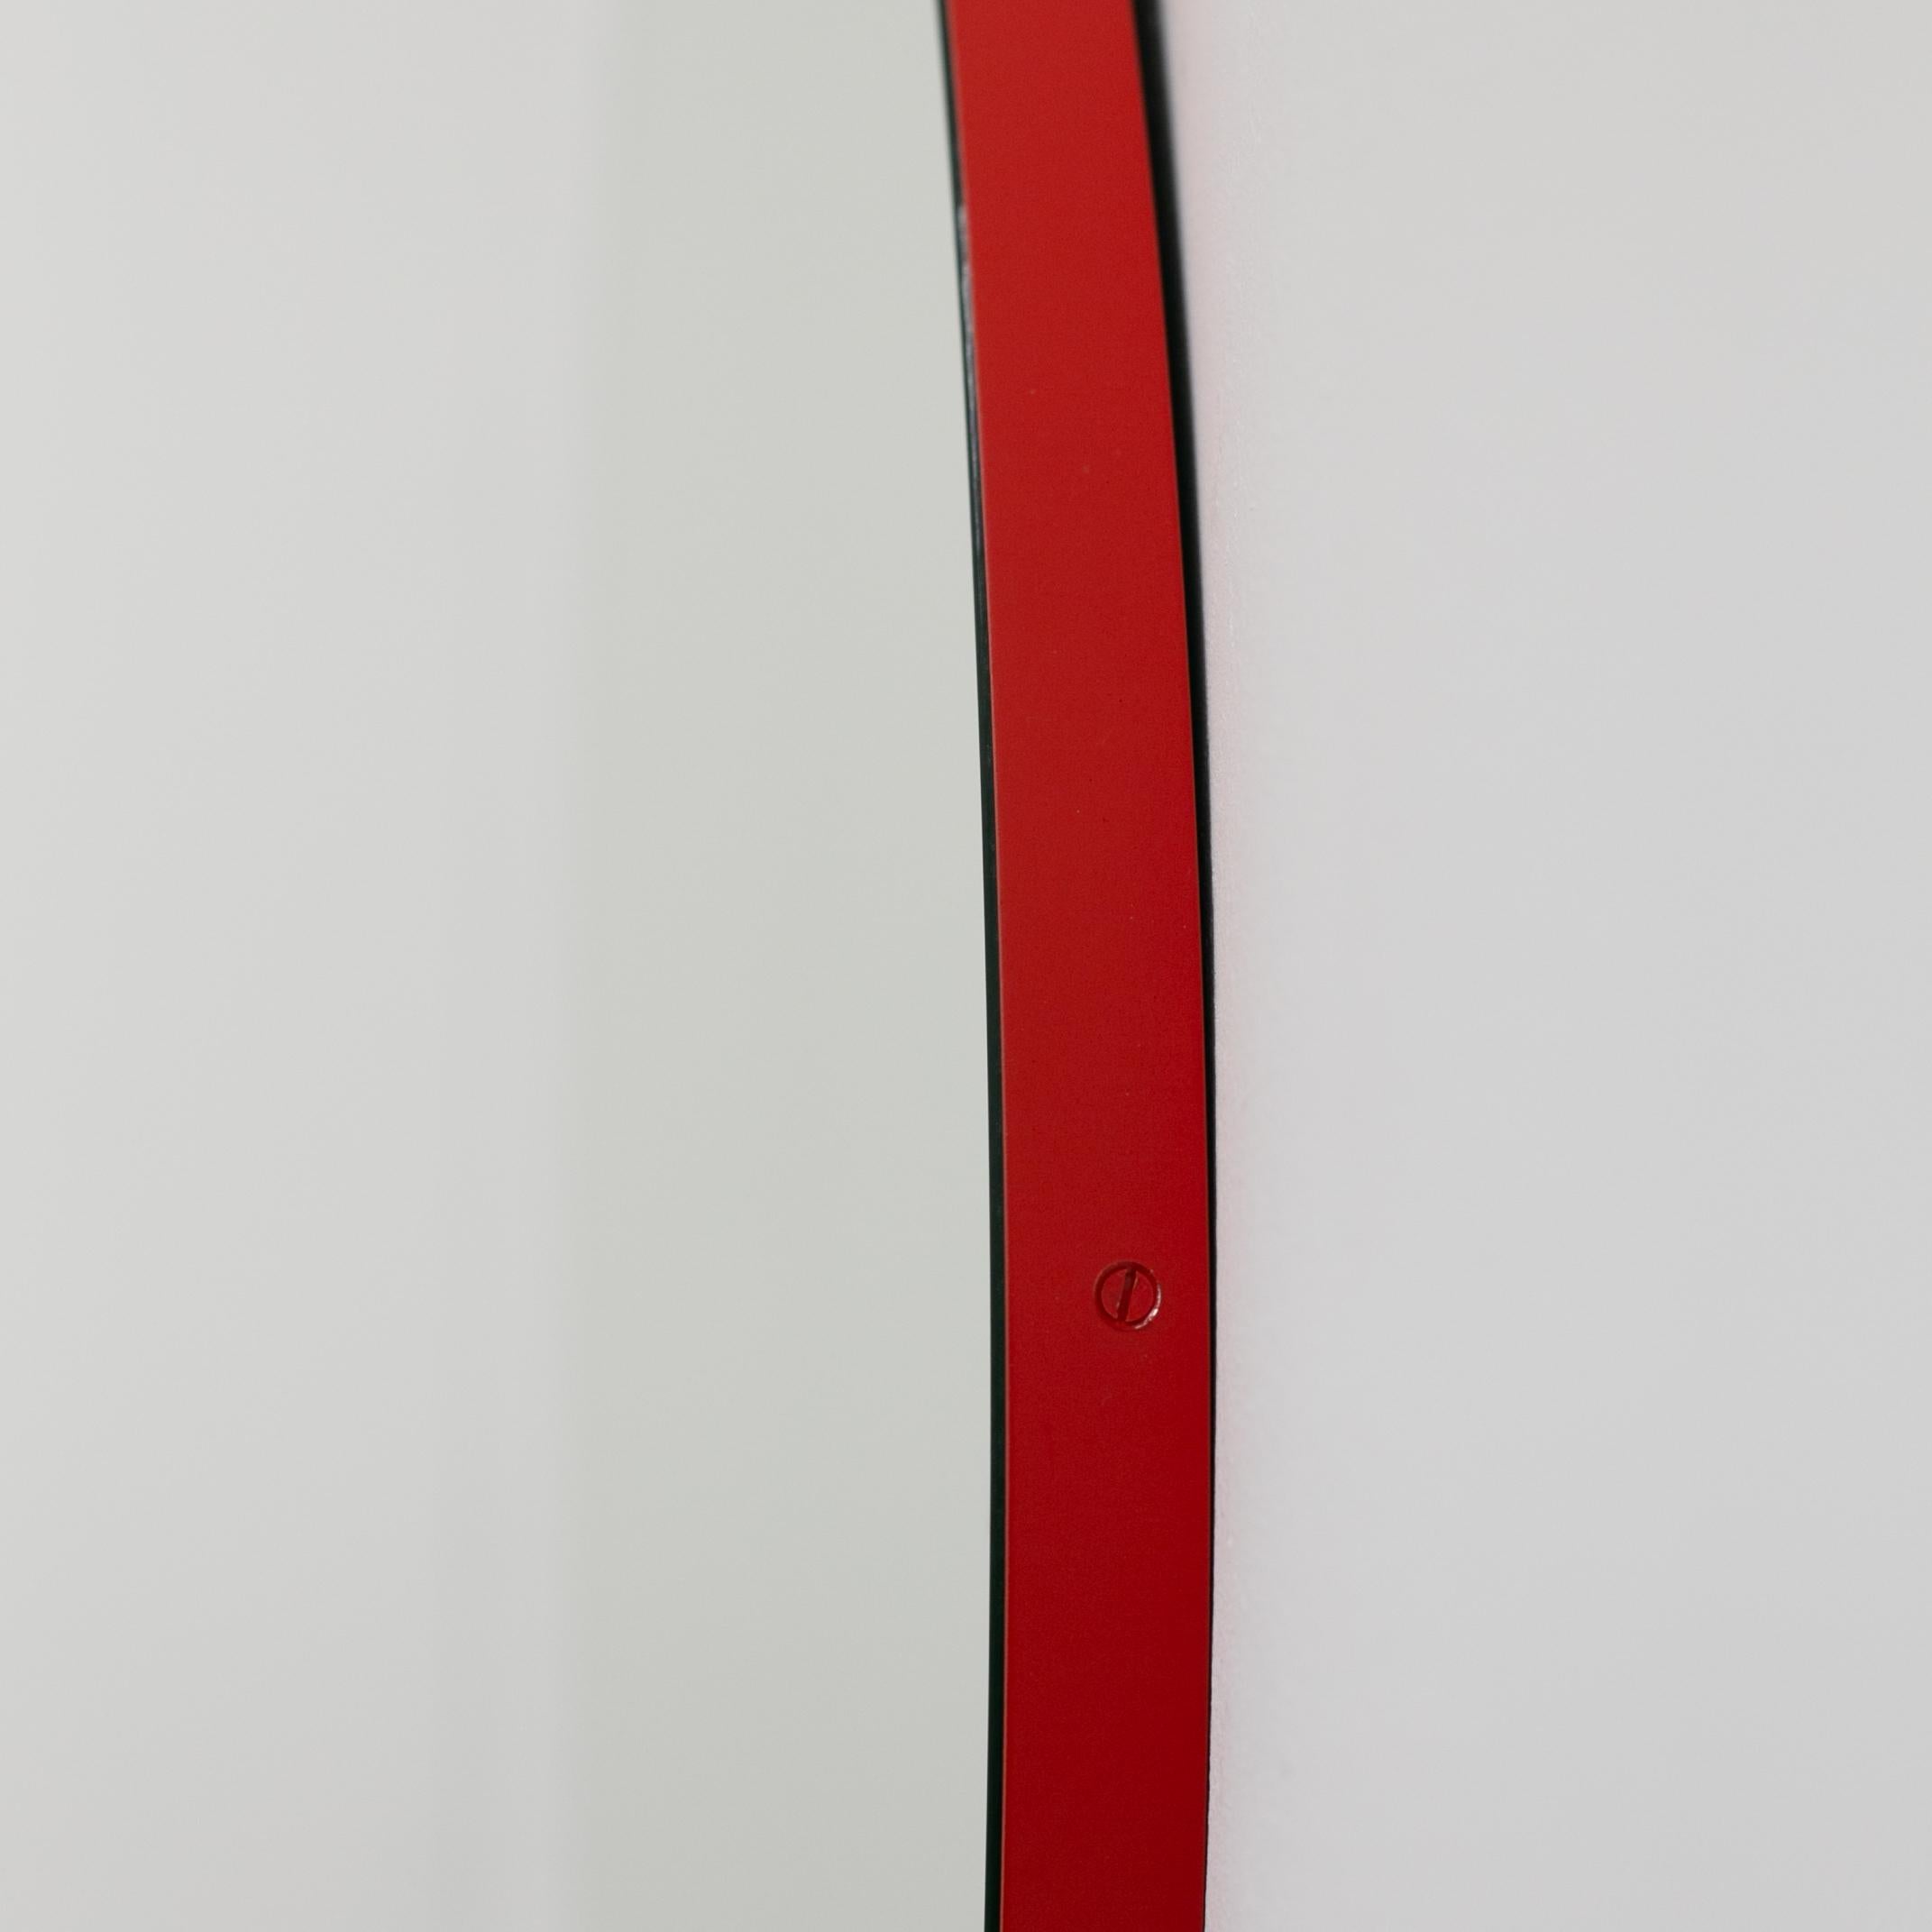 British Orbis Round Contemporary Mirror with Red Frame, Regular For Sale